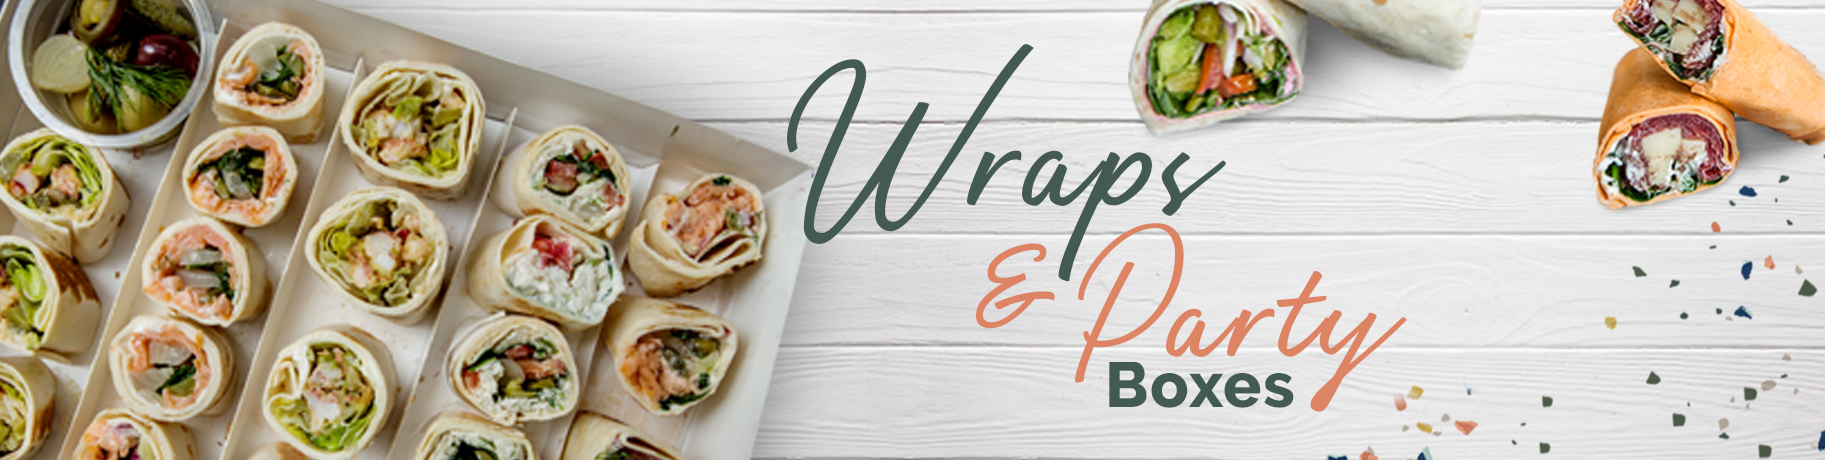 Sandwiches, Wraps & Party Boxes